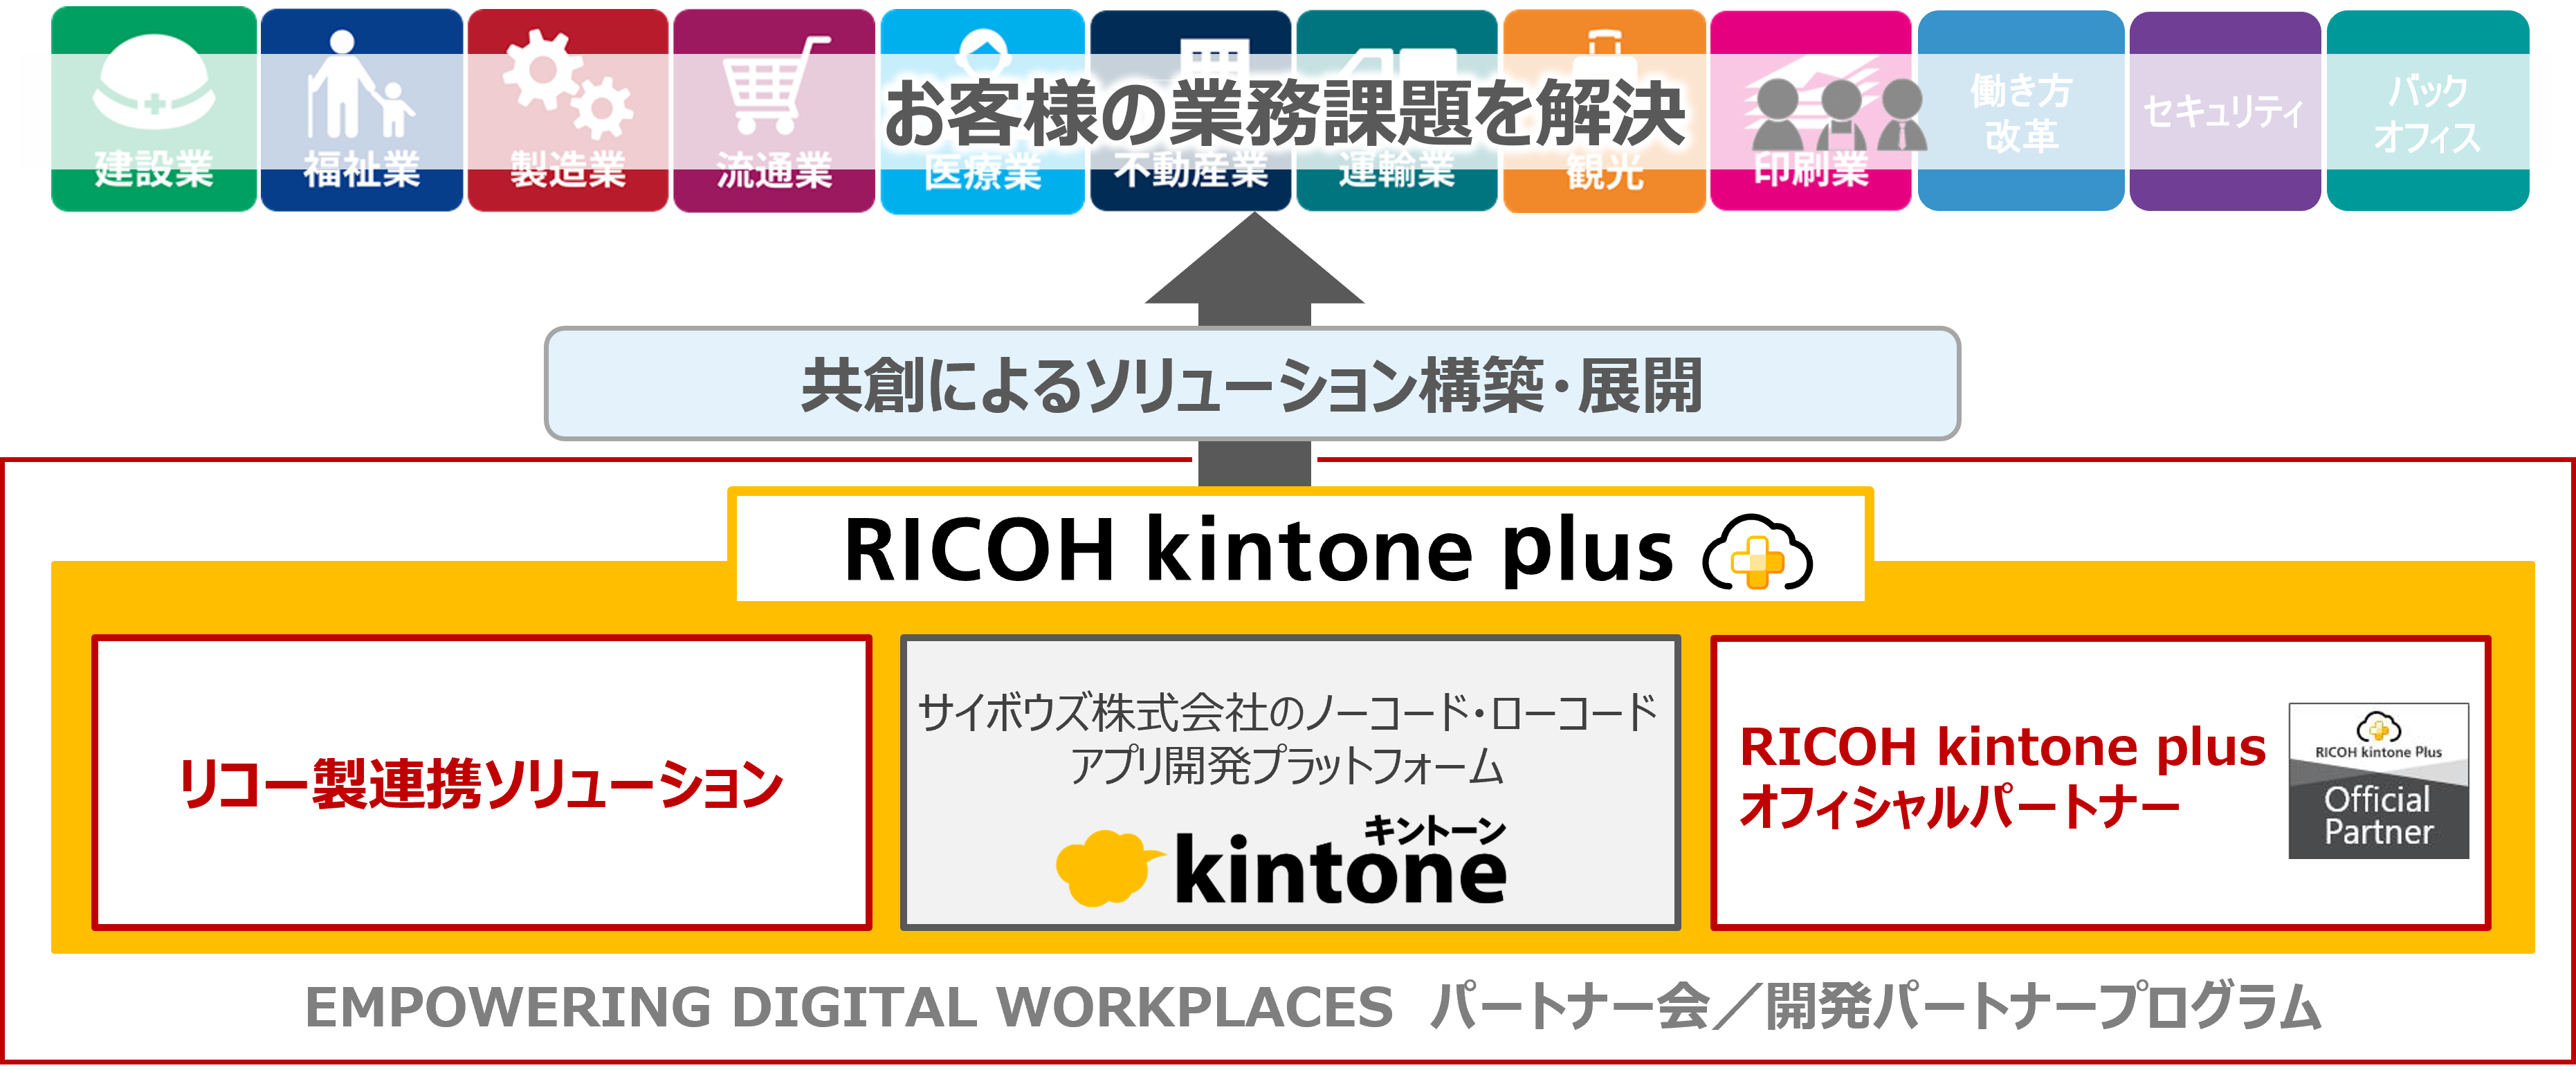 RICOH kintone plus オフィシャルパートナーの図